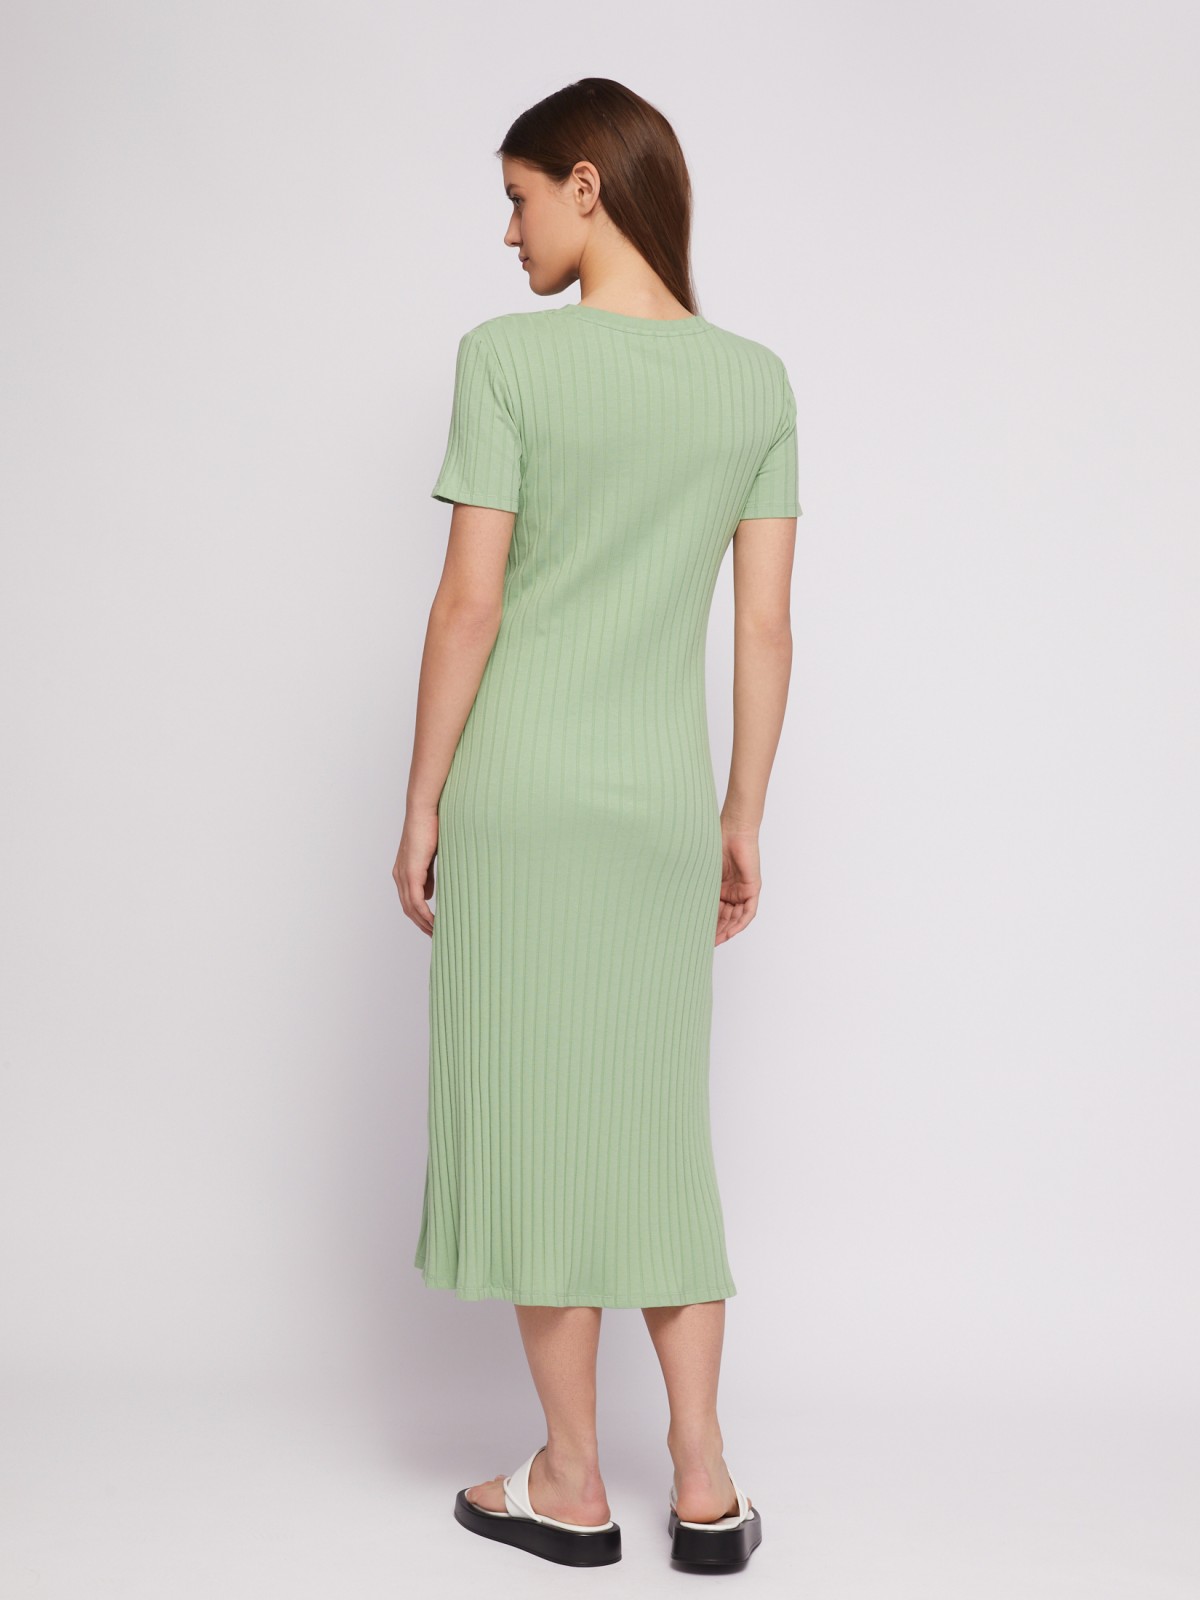 Платье-футболка миди с коротким рукавом zolla N24218139133, цвет светло-зеленый, размер XS - фото 6